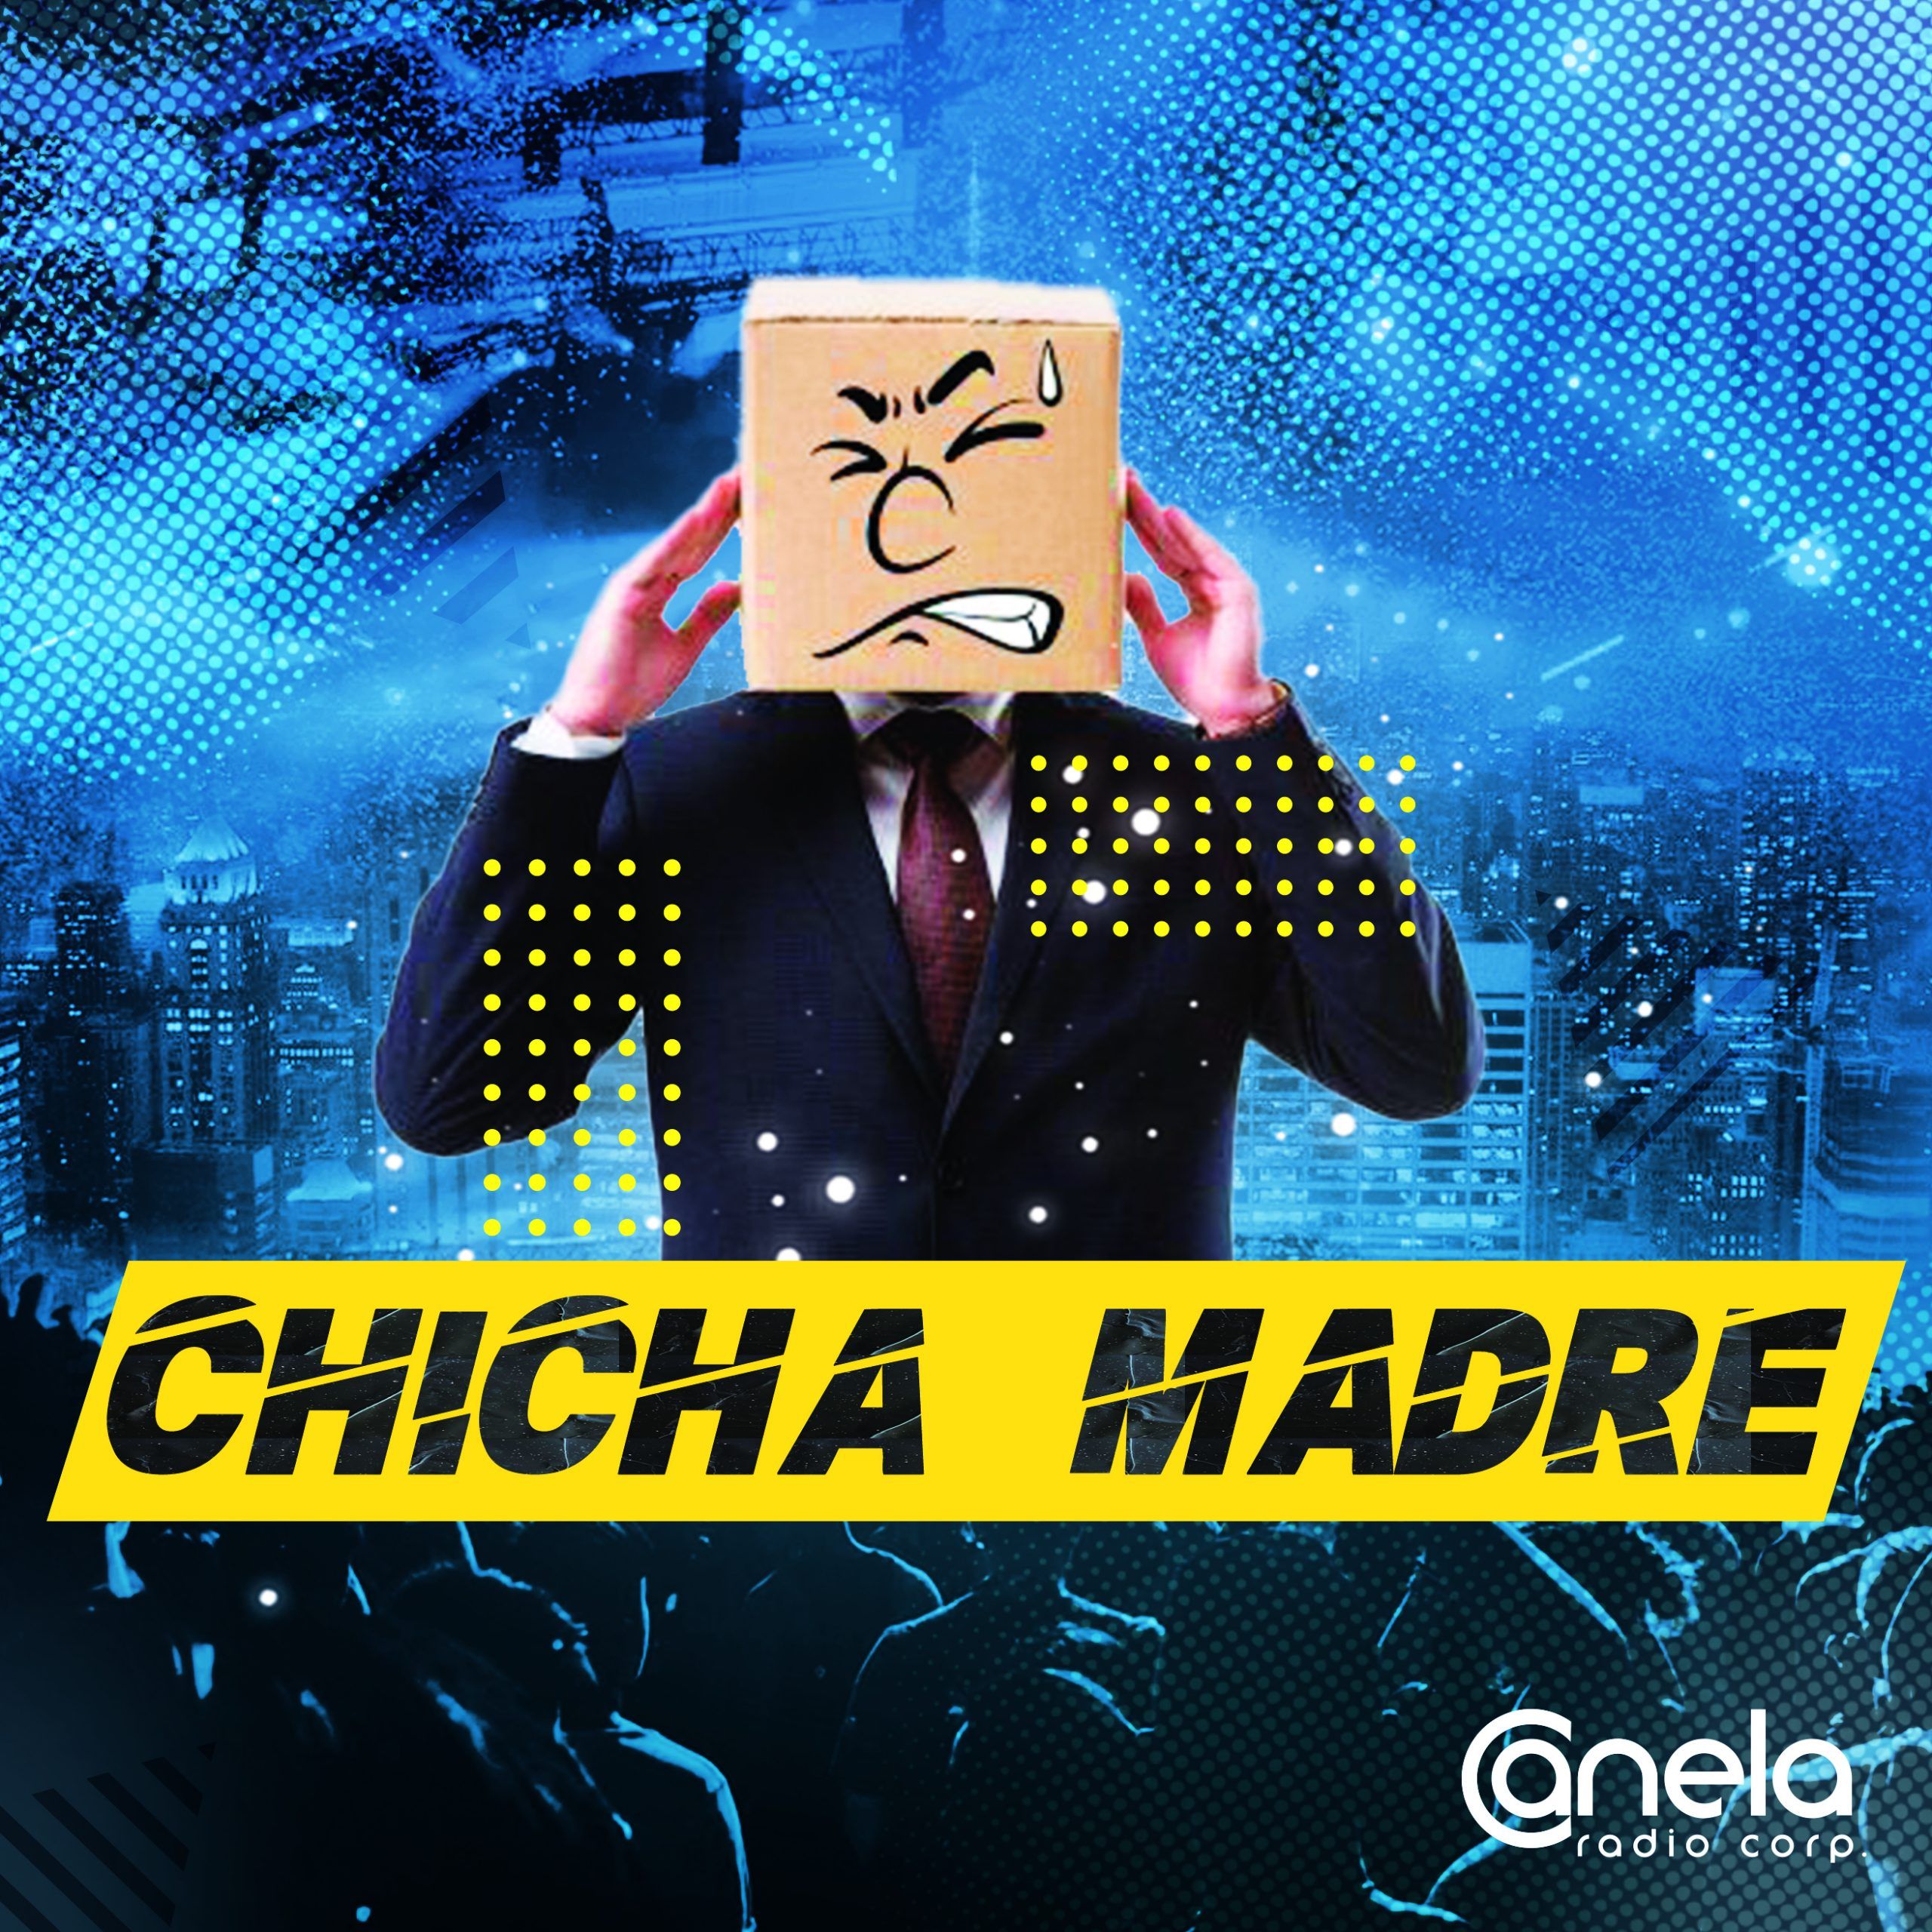 CHICHA MADRE